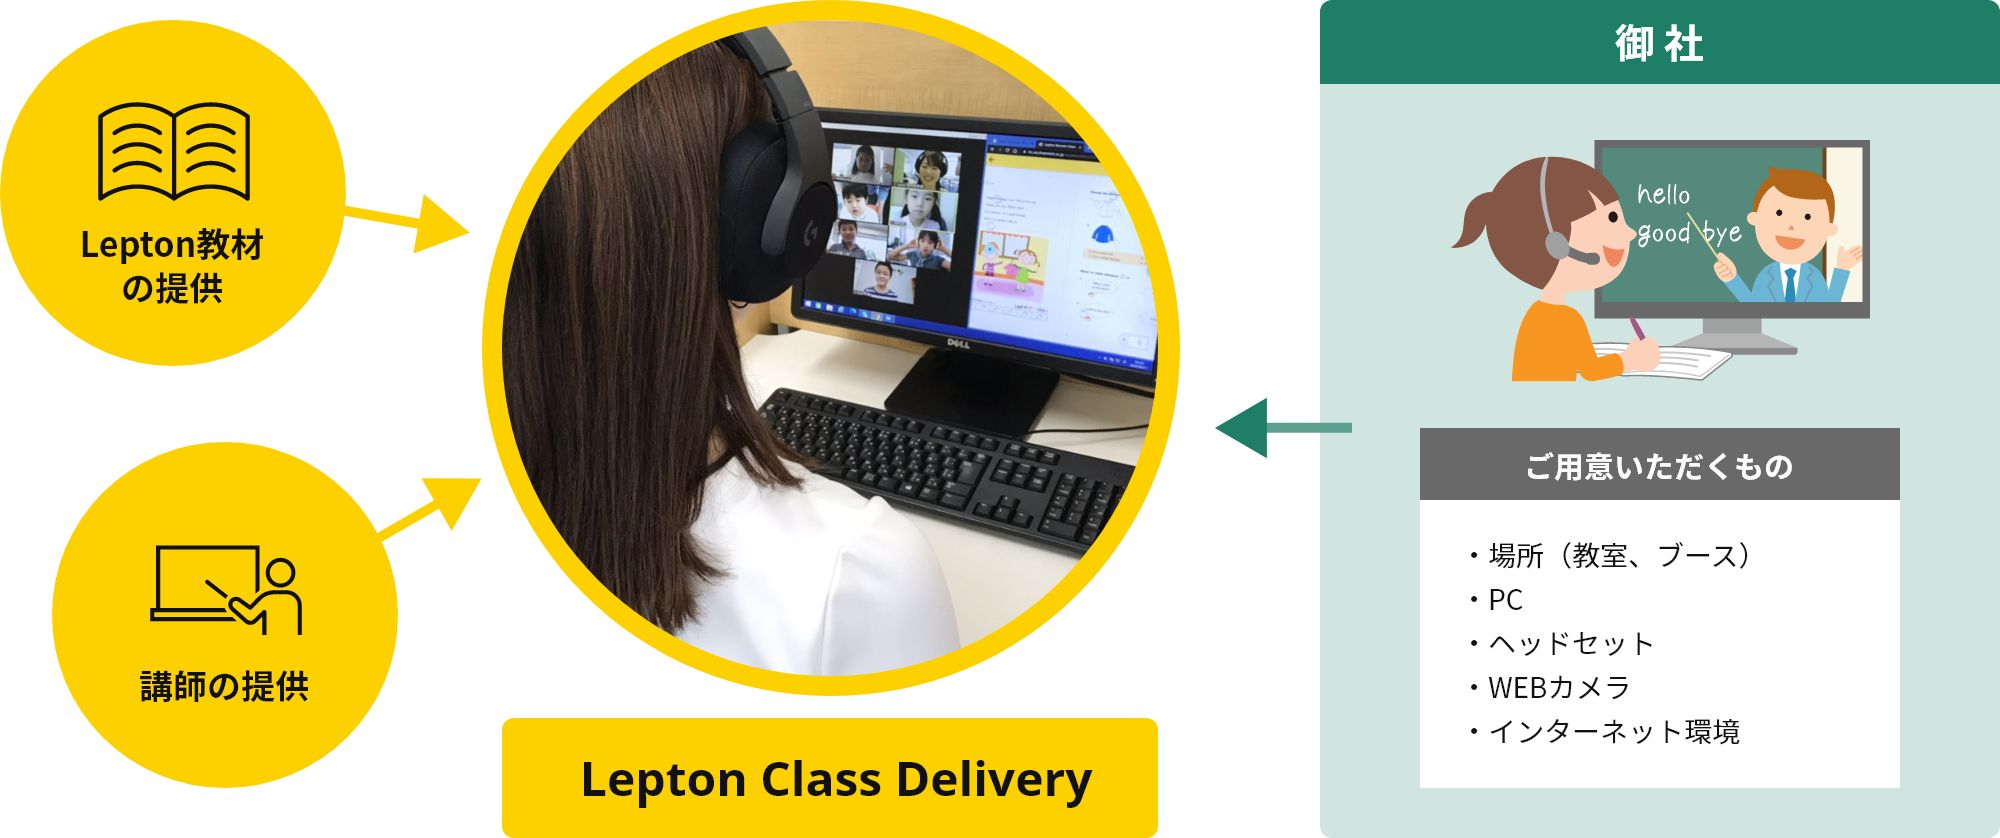  Lepton Class Deliveryのサービスイメージ